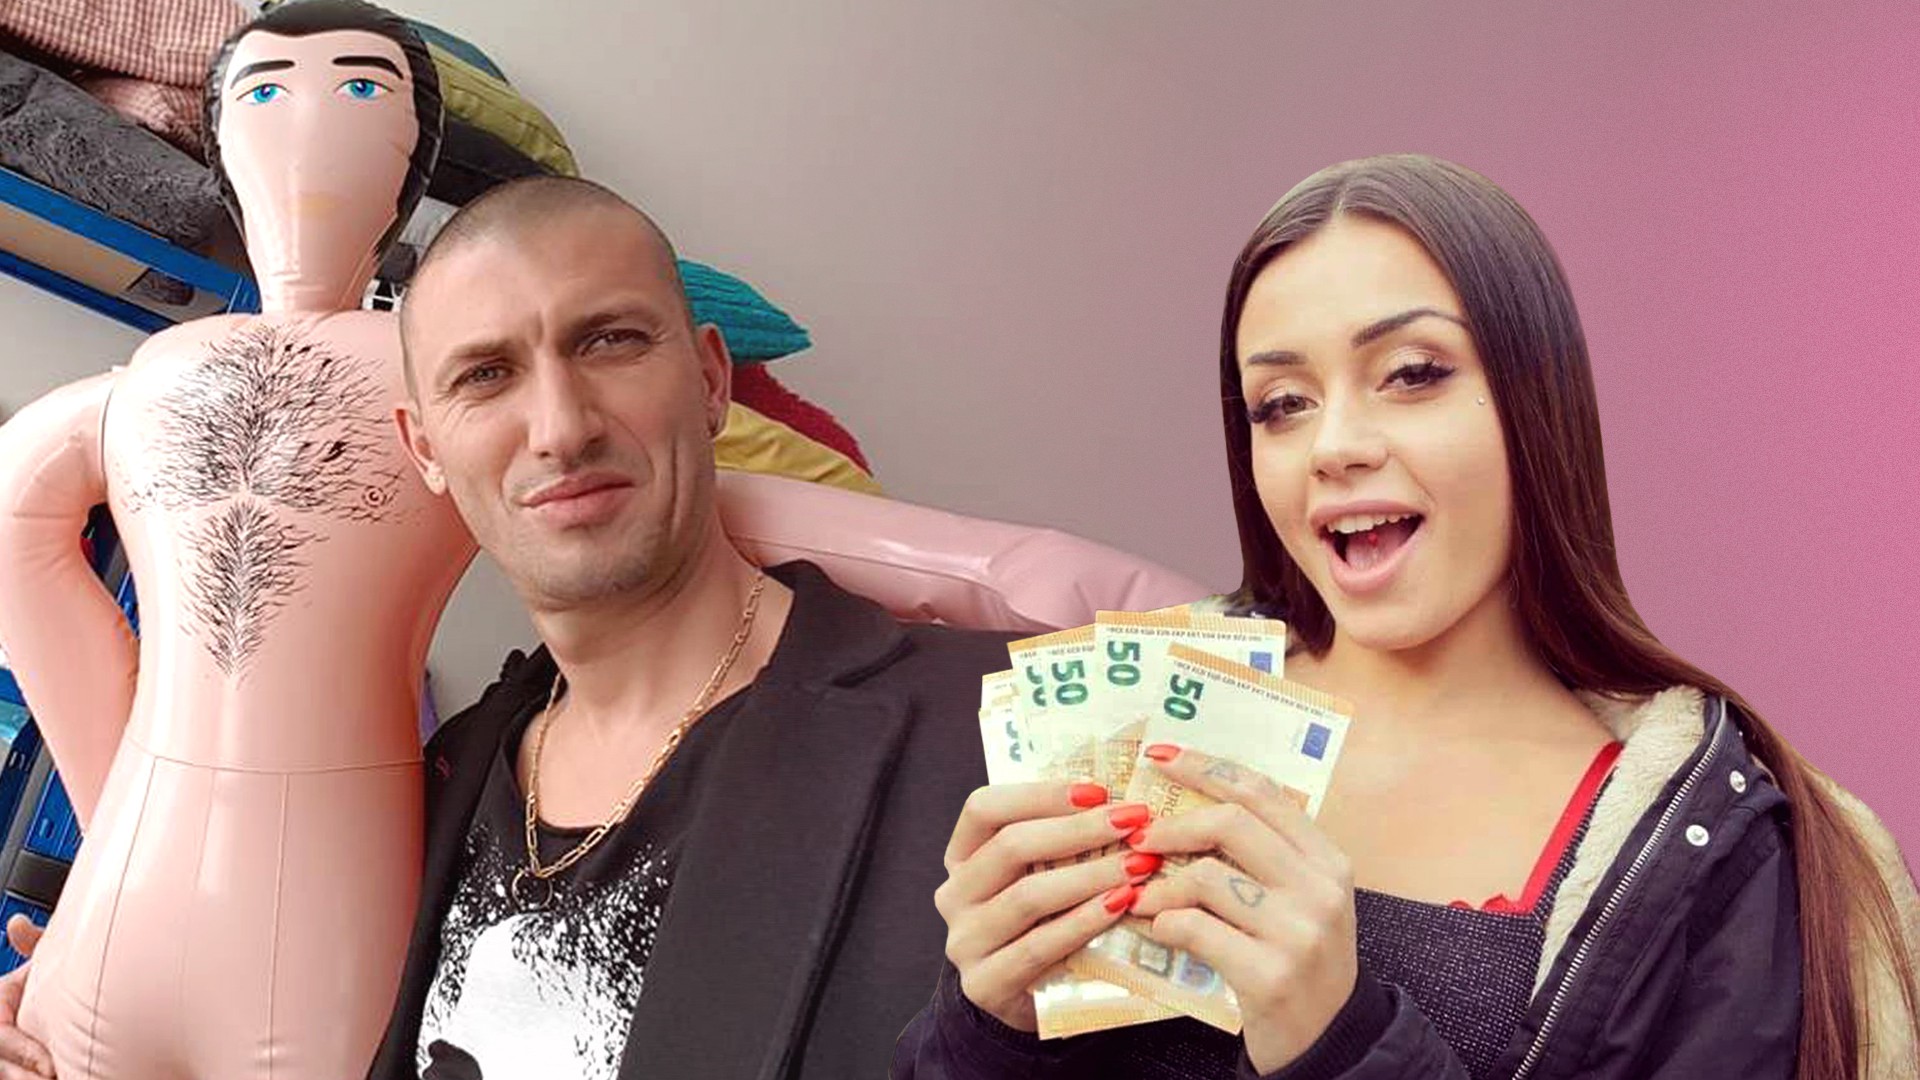 Mia Khalifa Prno Hub - We Asked Porn Stars Much Money They Make - VICE